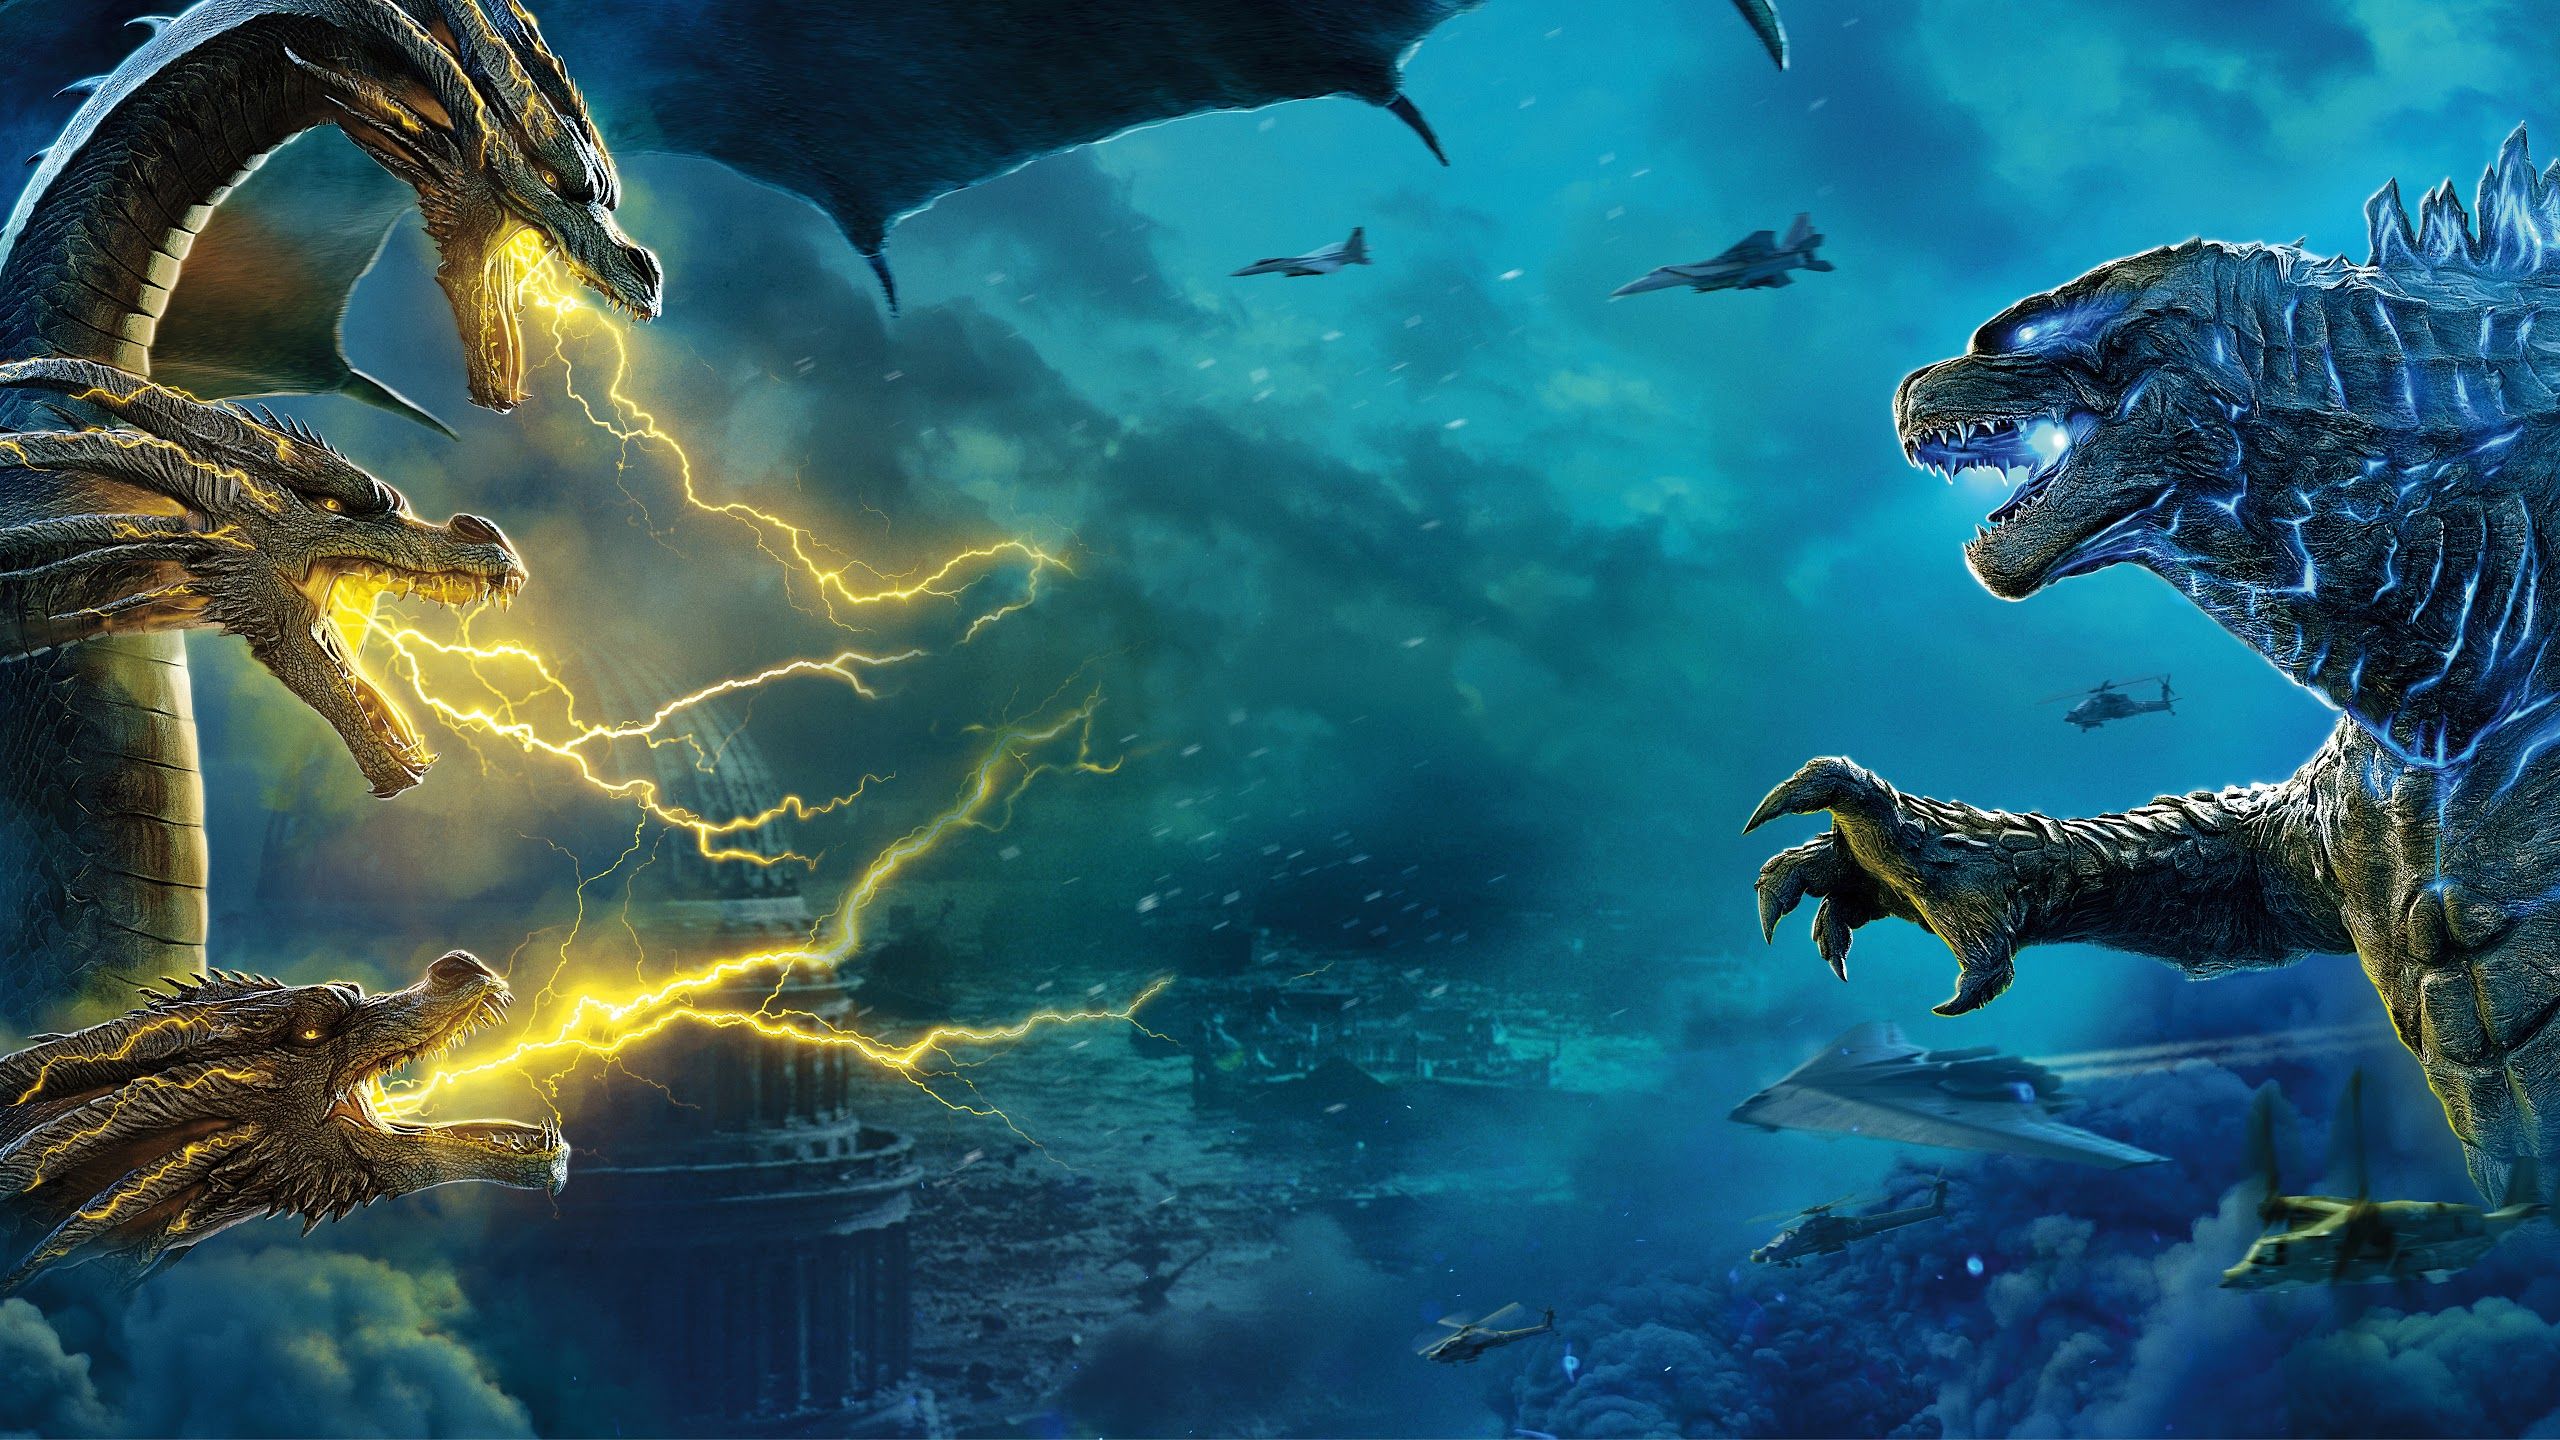 King Ghidorah vs. Godzilla Godzilla: King of the Monsters 8K Wallpaper